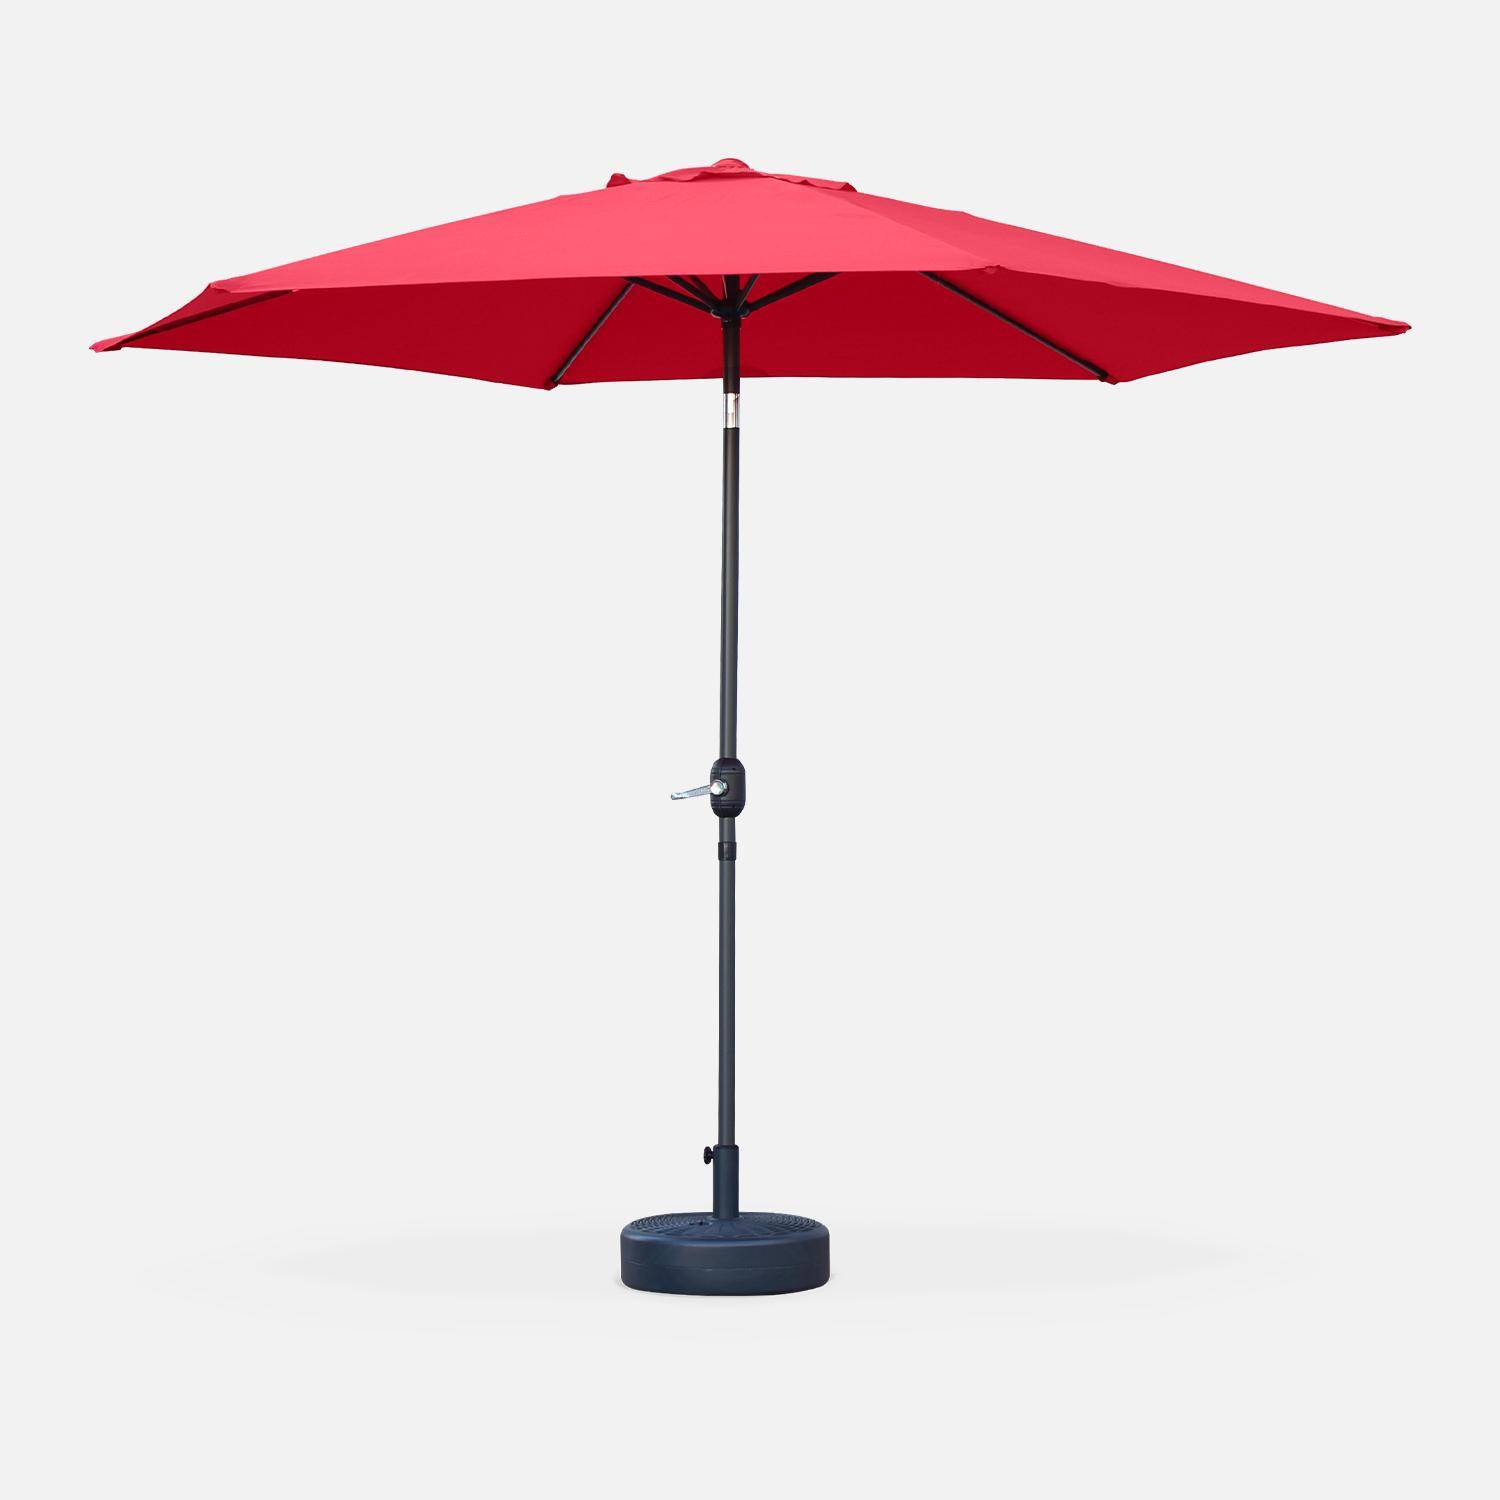 Sombrilla jardin, parasol rojo, mástil central, inclinable, redondo, Ø300cm, Touquet Photo3